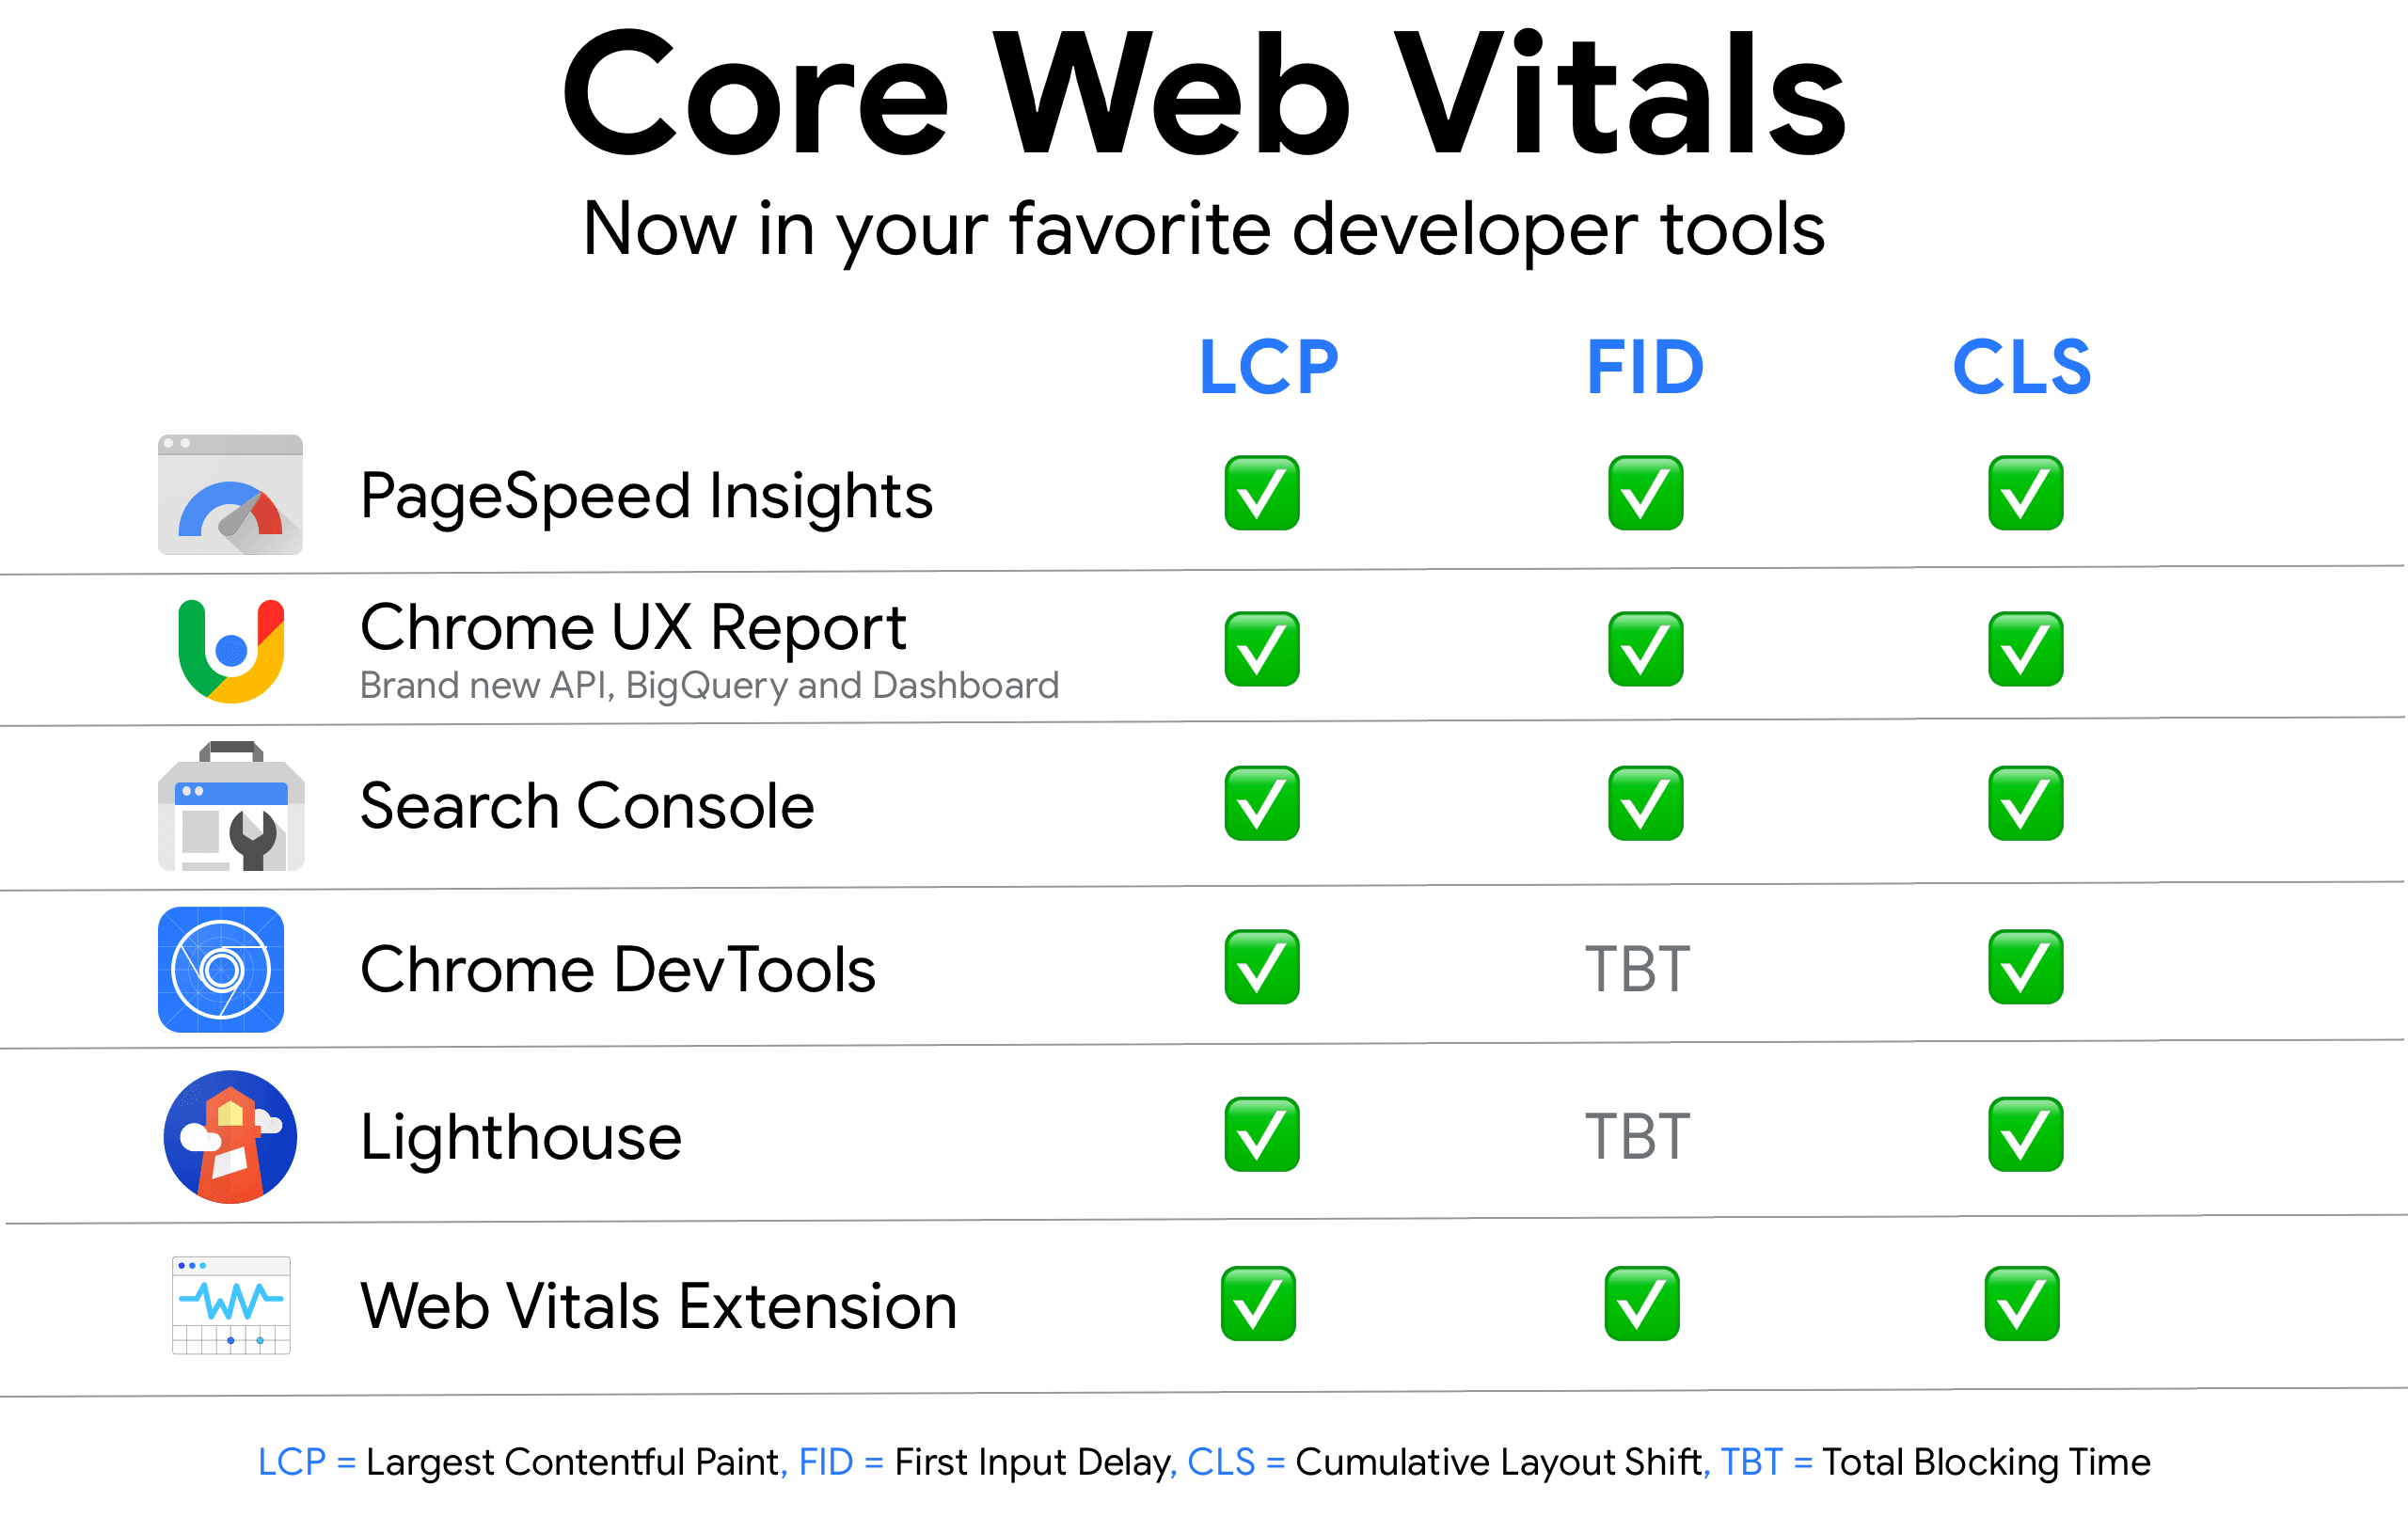 Cách tối ưu điểm số Core Web Vitals